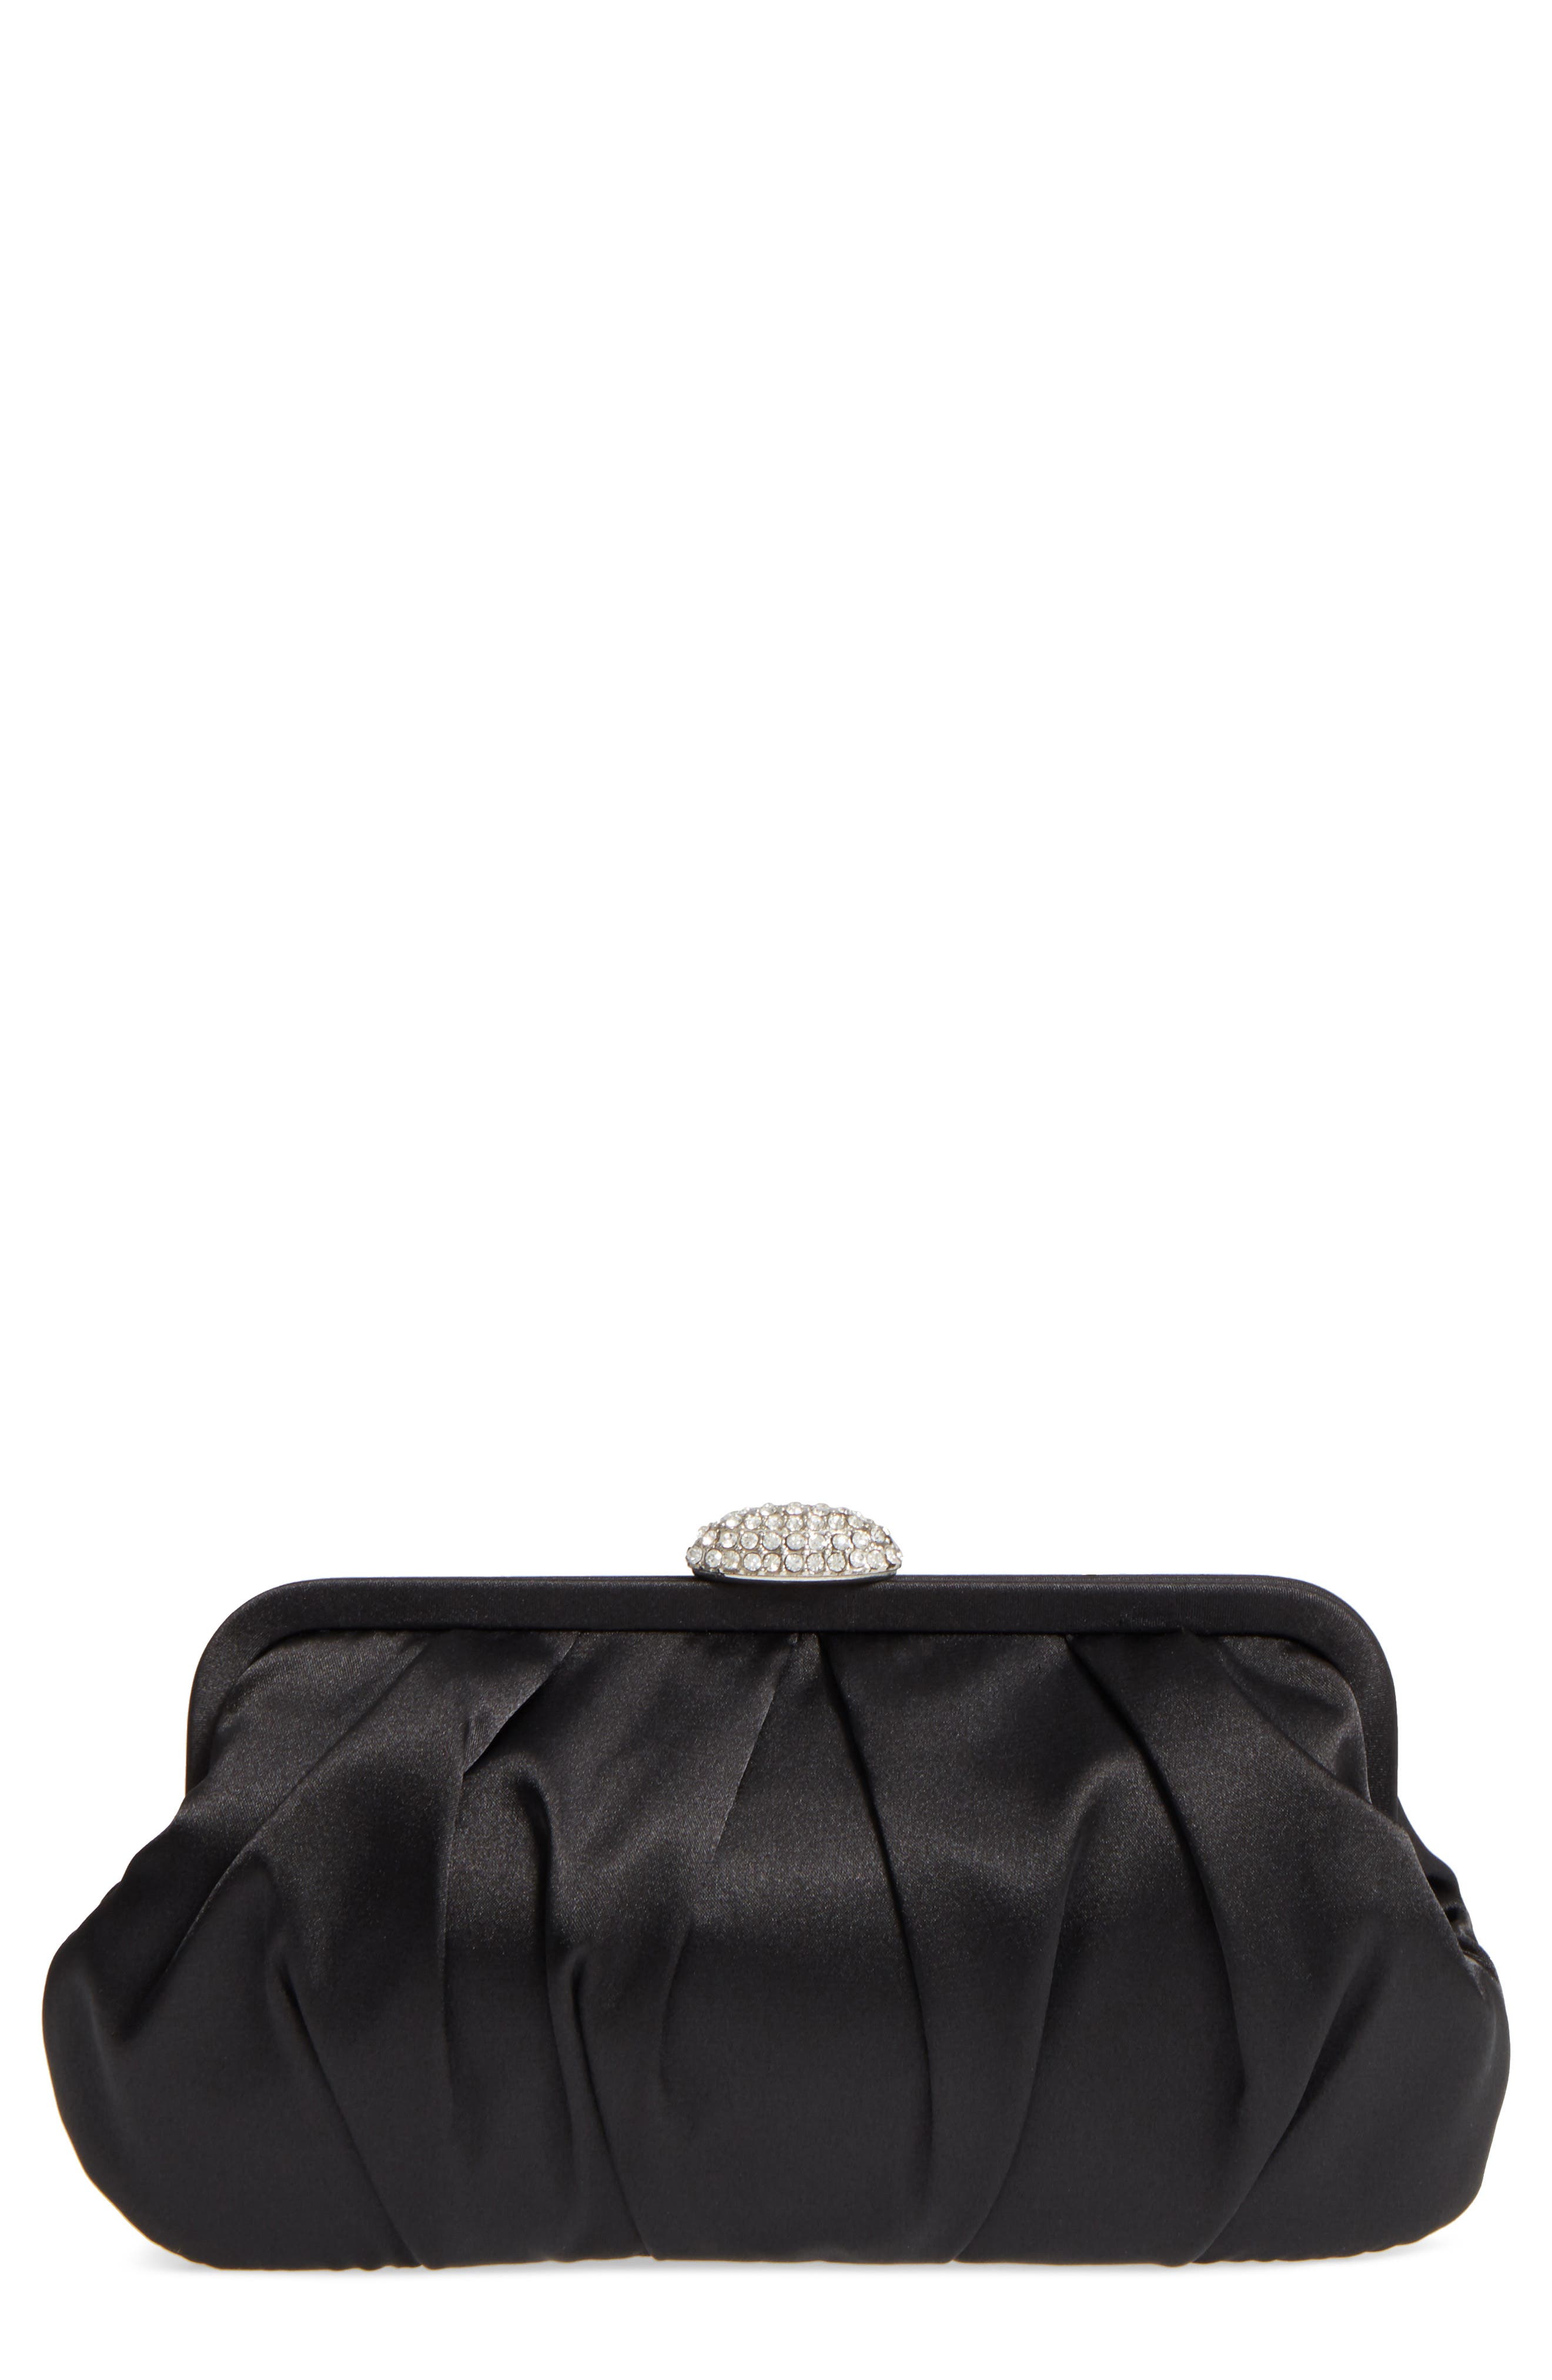 Elegant Small Solid Color PU Leather Shine Hard Clutch Evening Bag Handbag 